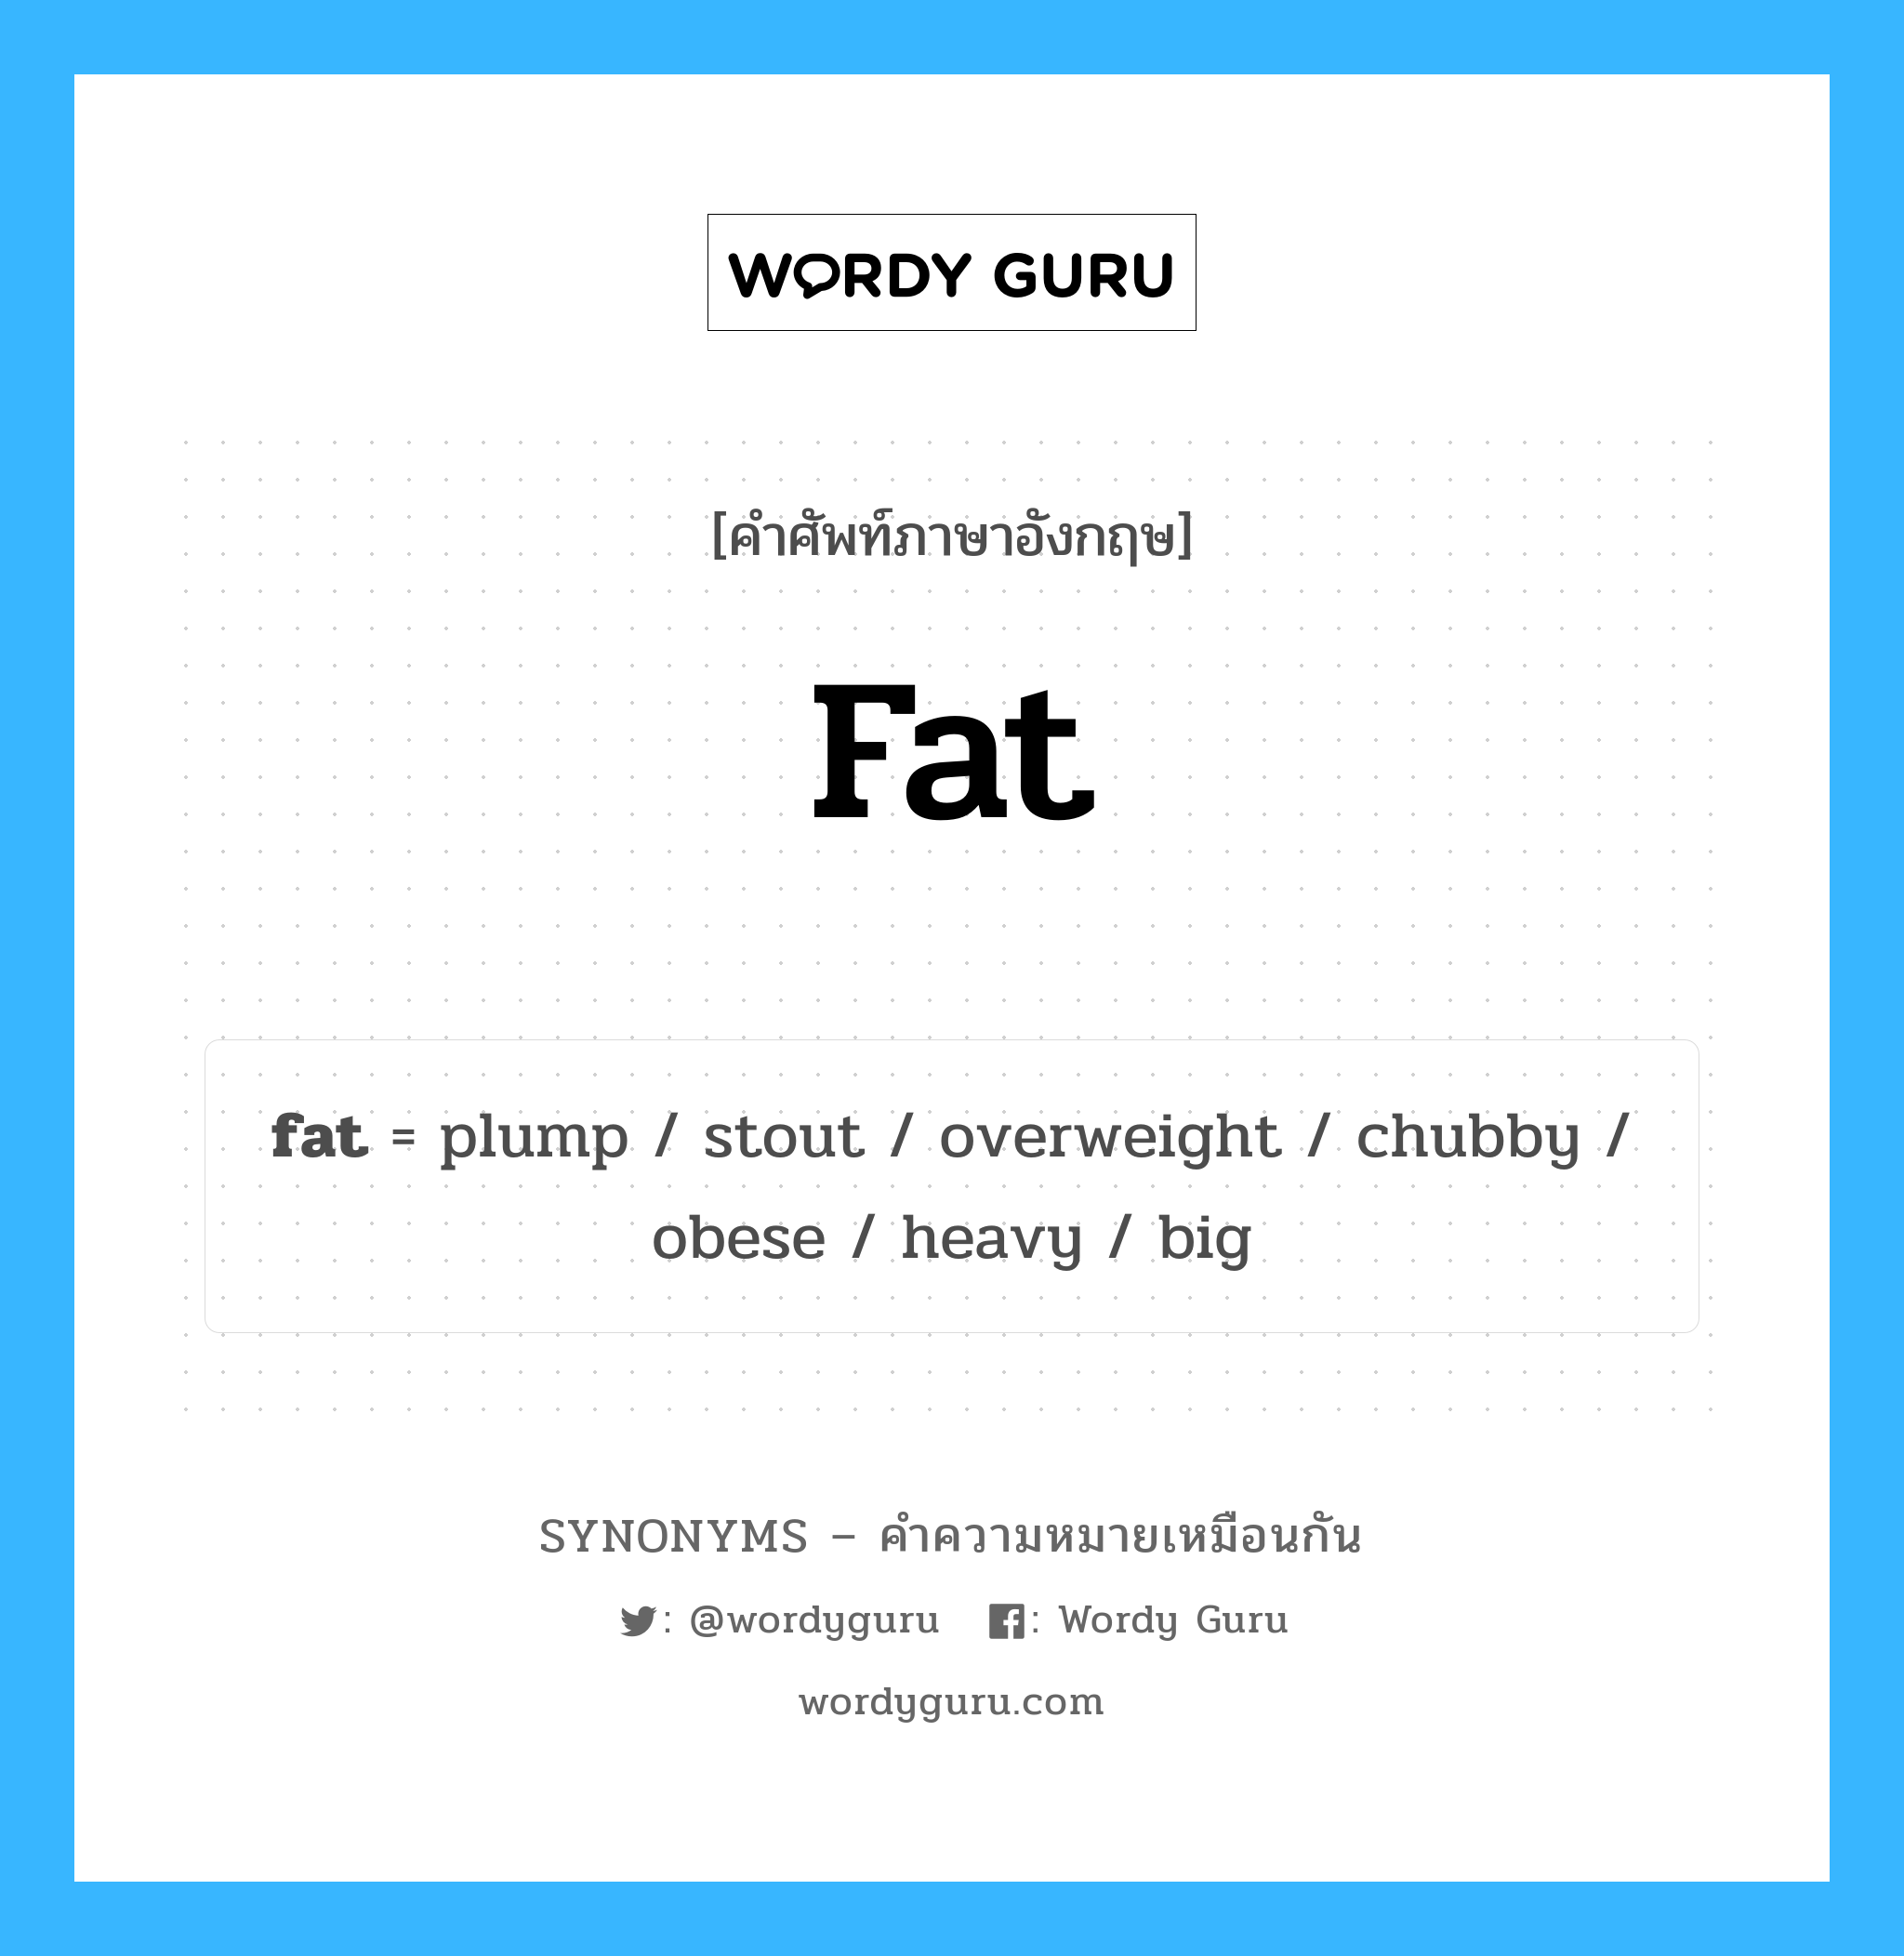 obese เป็นหนึ่งใน fat และมีคำอื่น ๆ อีกดังนี้, คำศัพท์ภาษาอังกฤษ obese ความหมายคล้ายกันกับ fat แปลว่า อ้วน หมวด fat